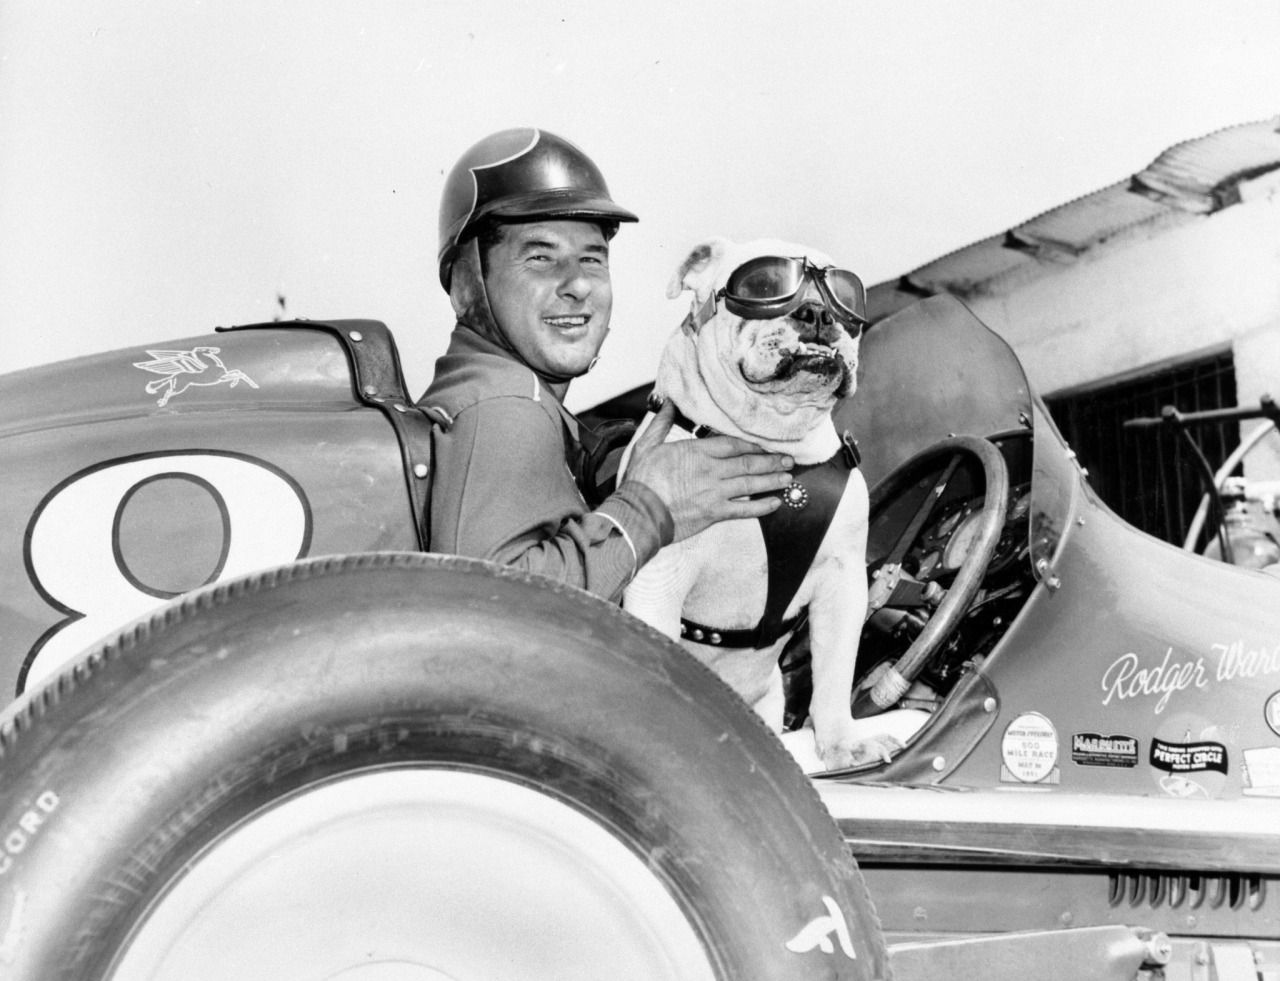 Rodger Ward "1959 & 1962 Indianapolis 500 Winner" Personal Worn Firestone IndyCar Jacket